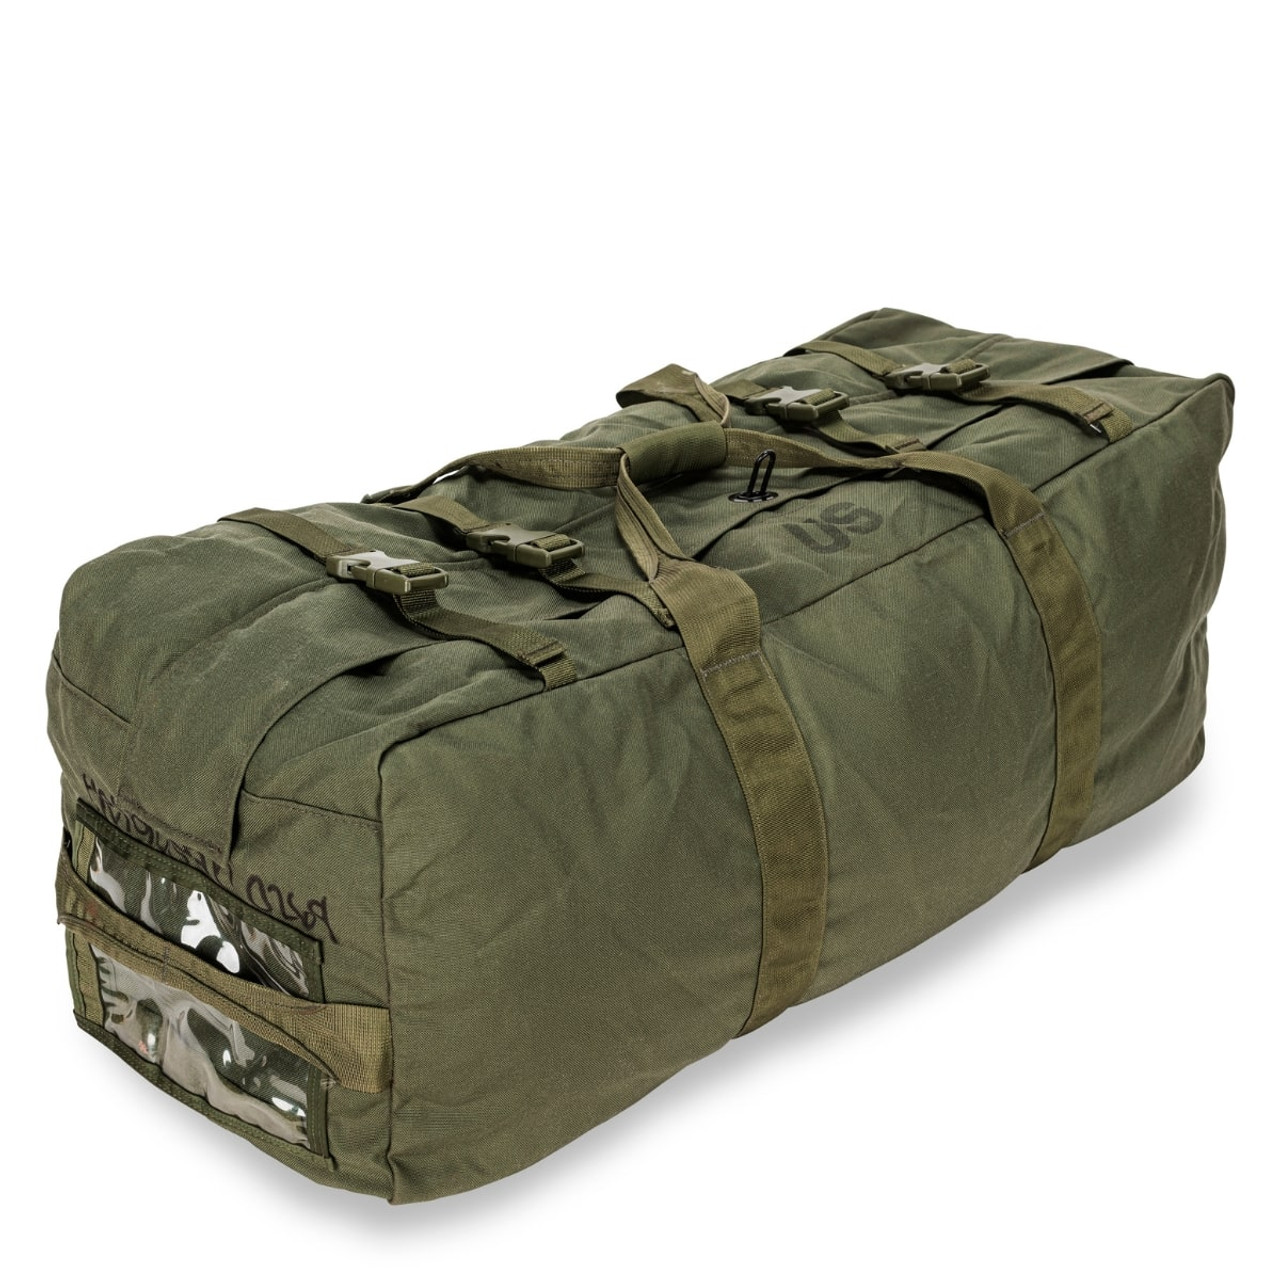 Adventure Rolling Duffle Bag, Medium | Luggage & Duffle Bags at L.L.Bean